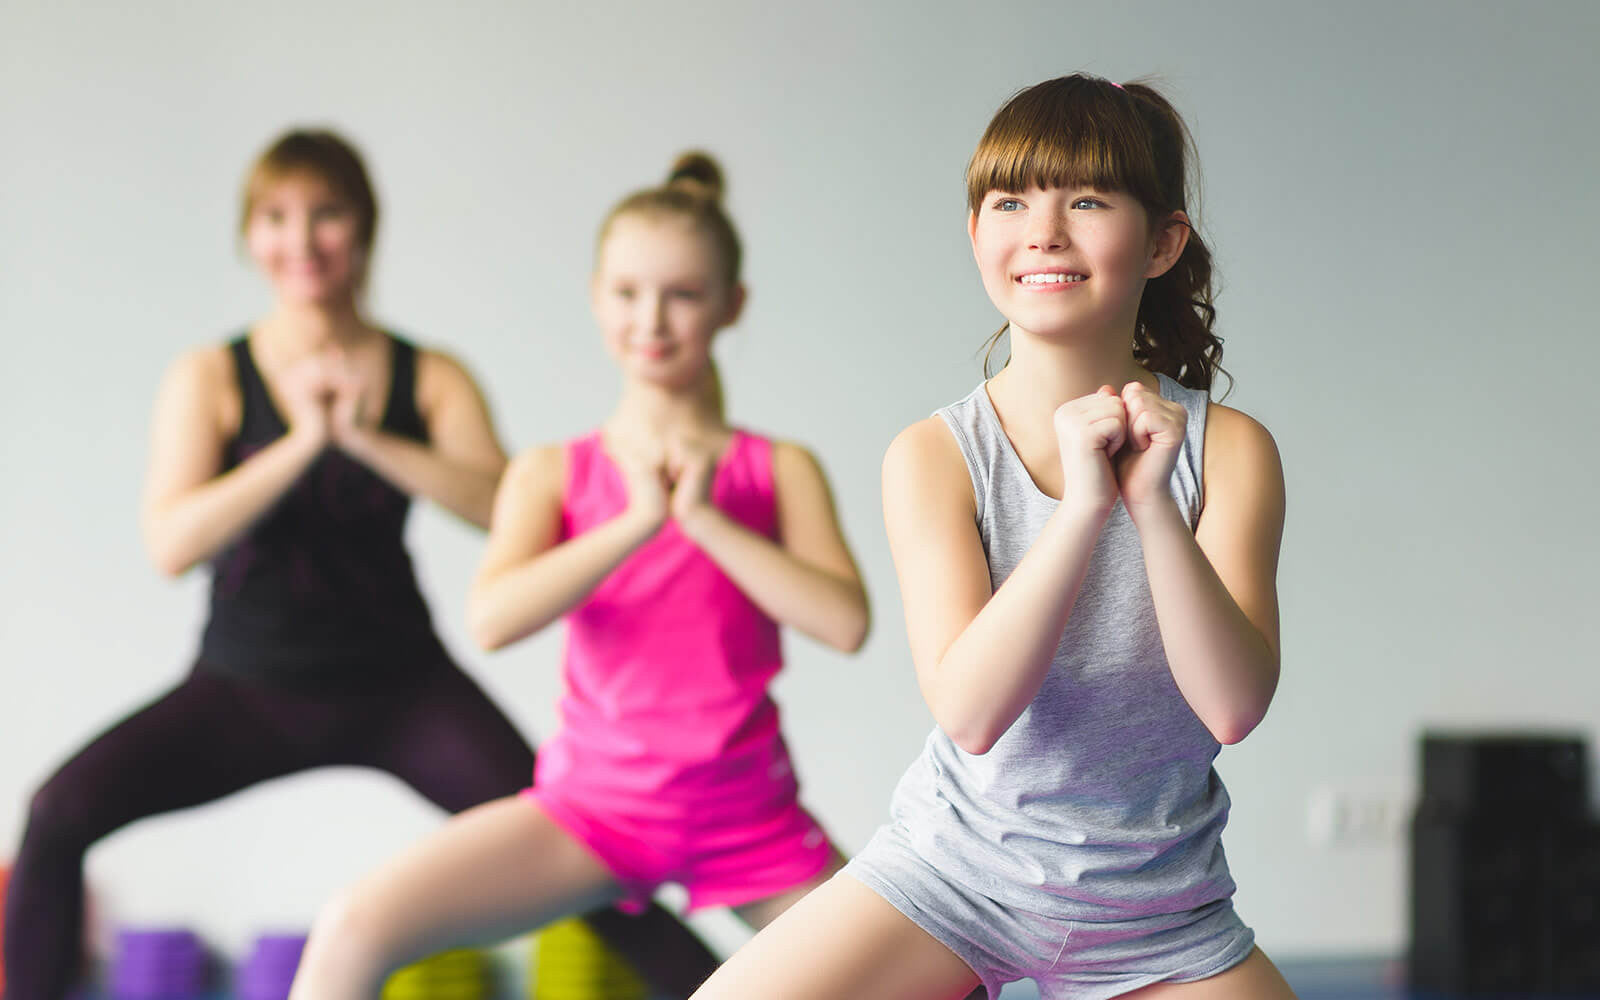 Pilates training for kids creates supple bodies